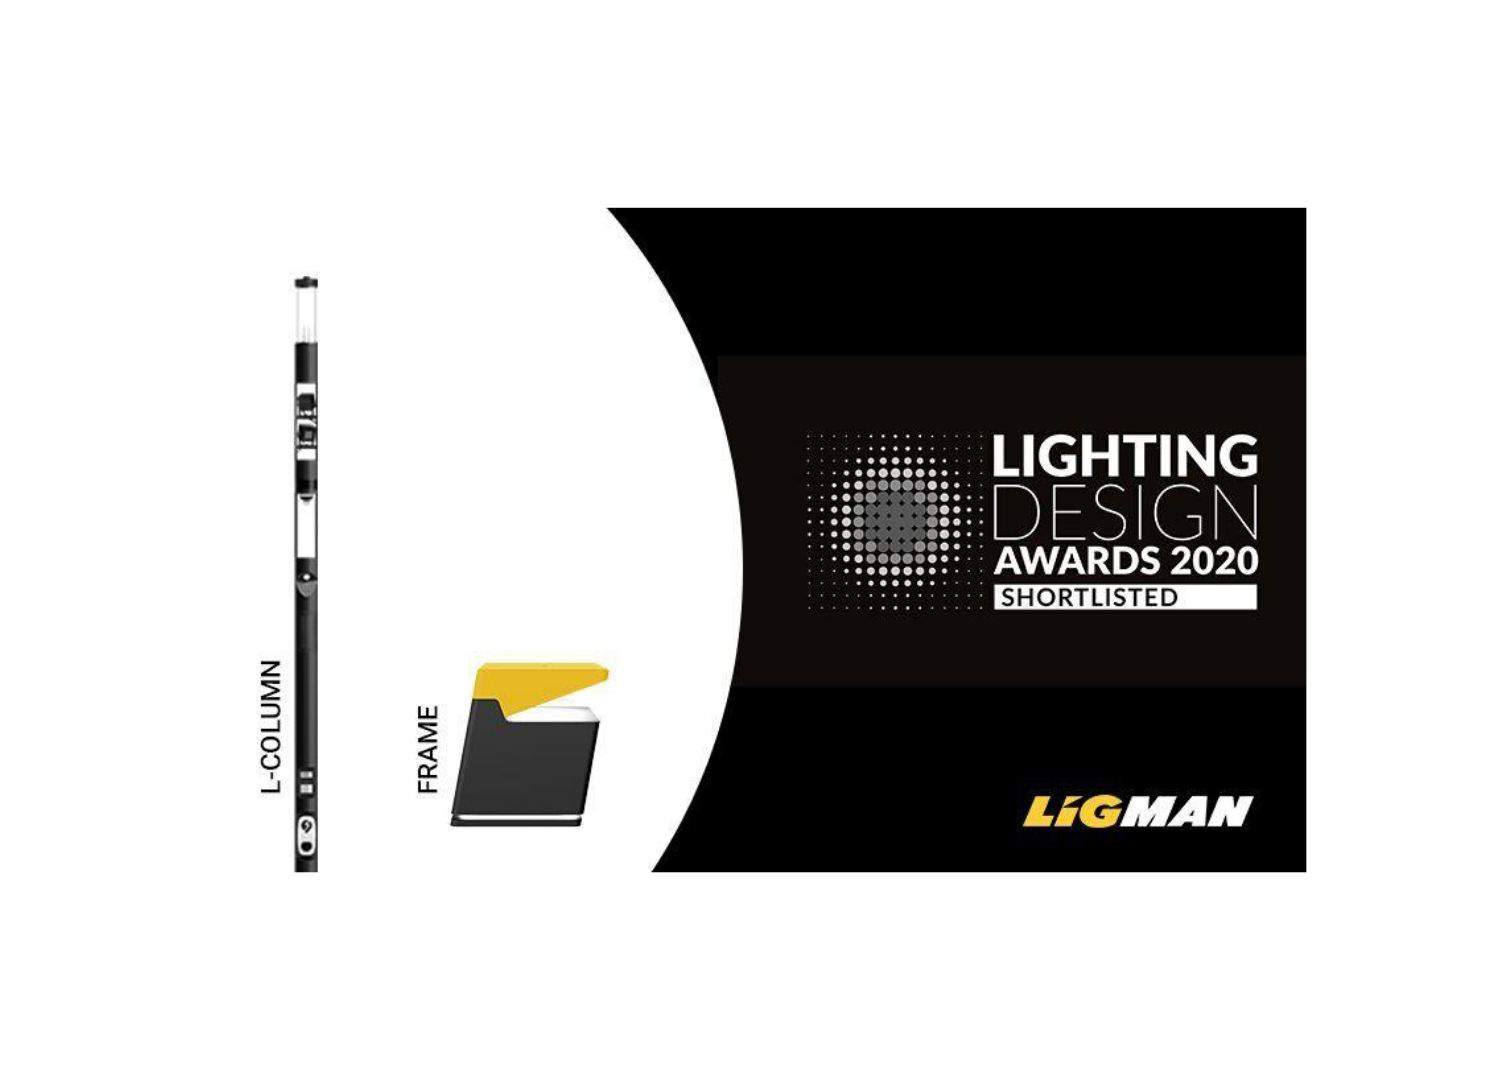 LIGMAN Shortlisted for the 2020 Lighting Design Awards